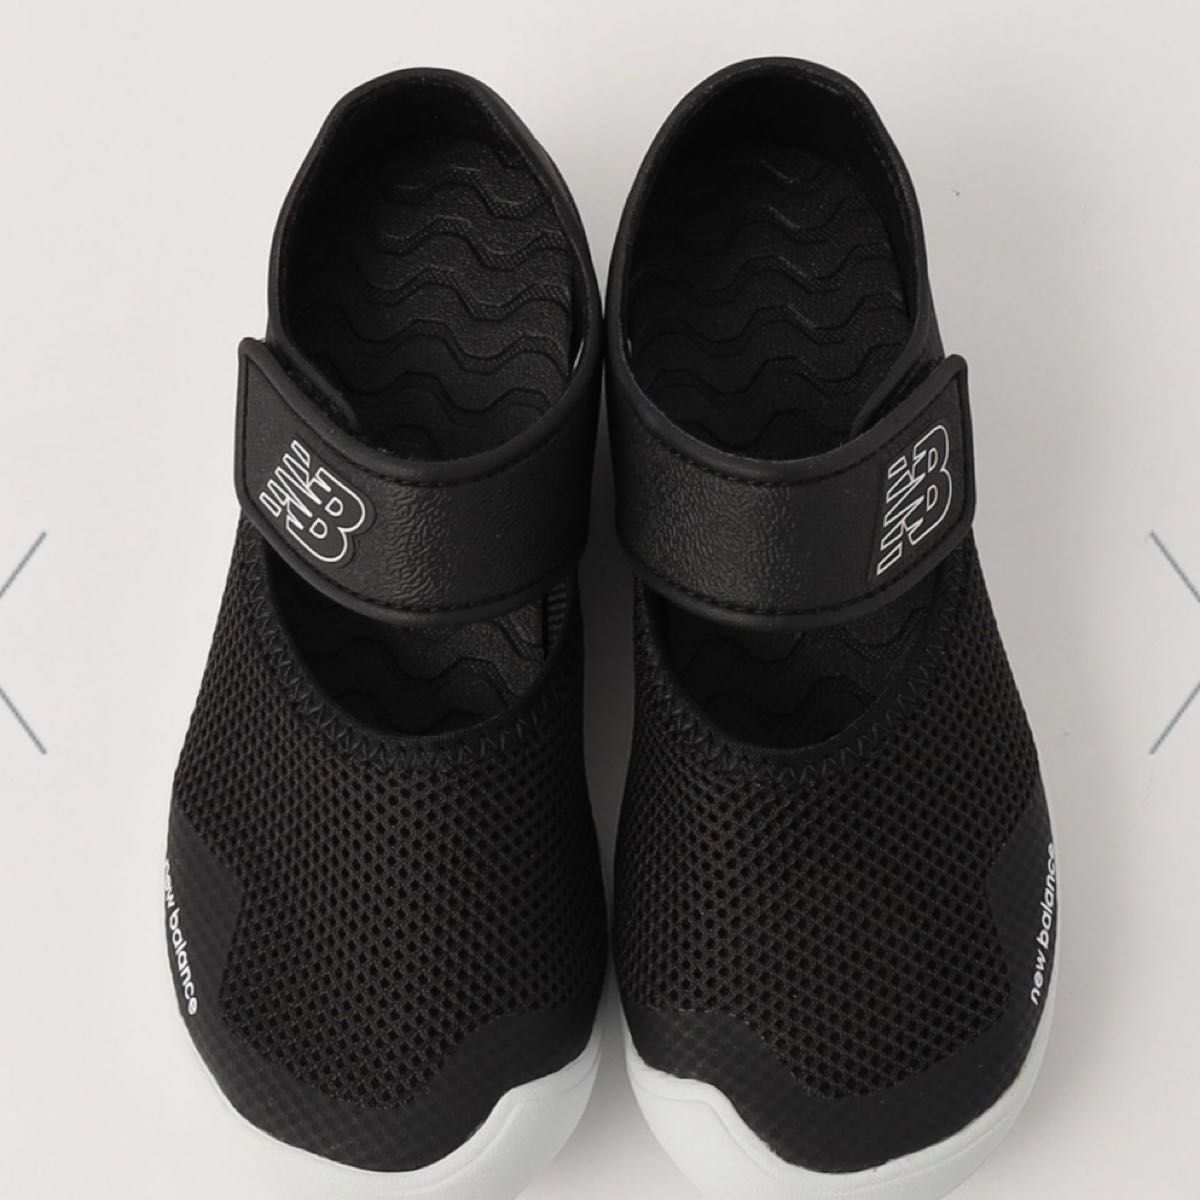 <New Balance>208 v2 Sandal B2 / サンダル / キッズ靴ブラック黒海川 サンダル ニューバランス 